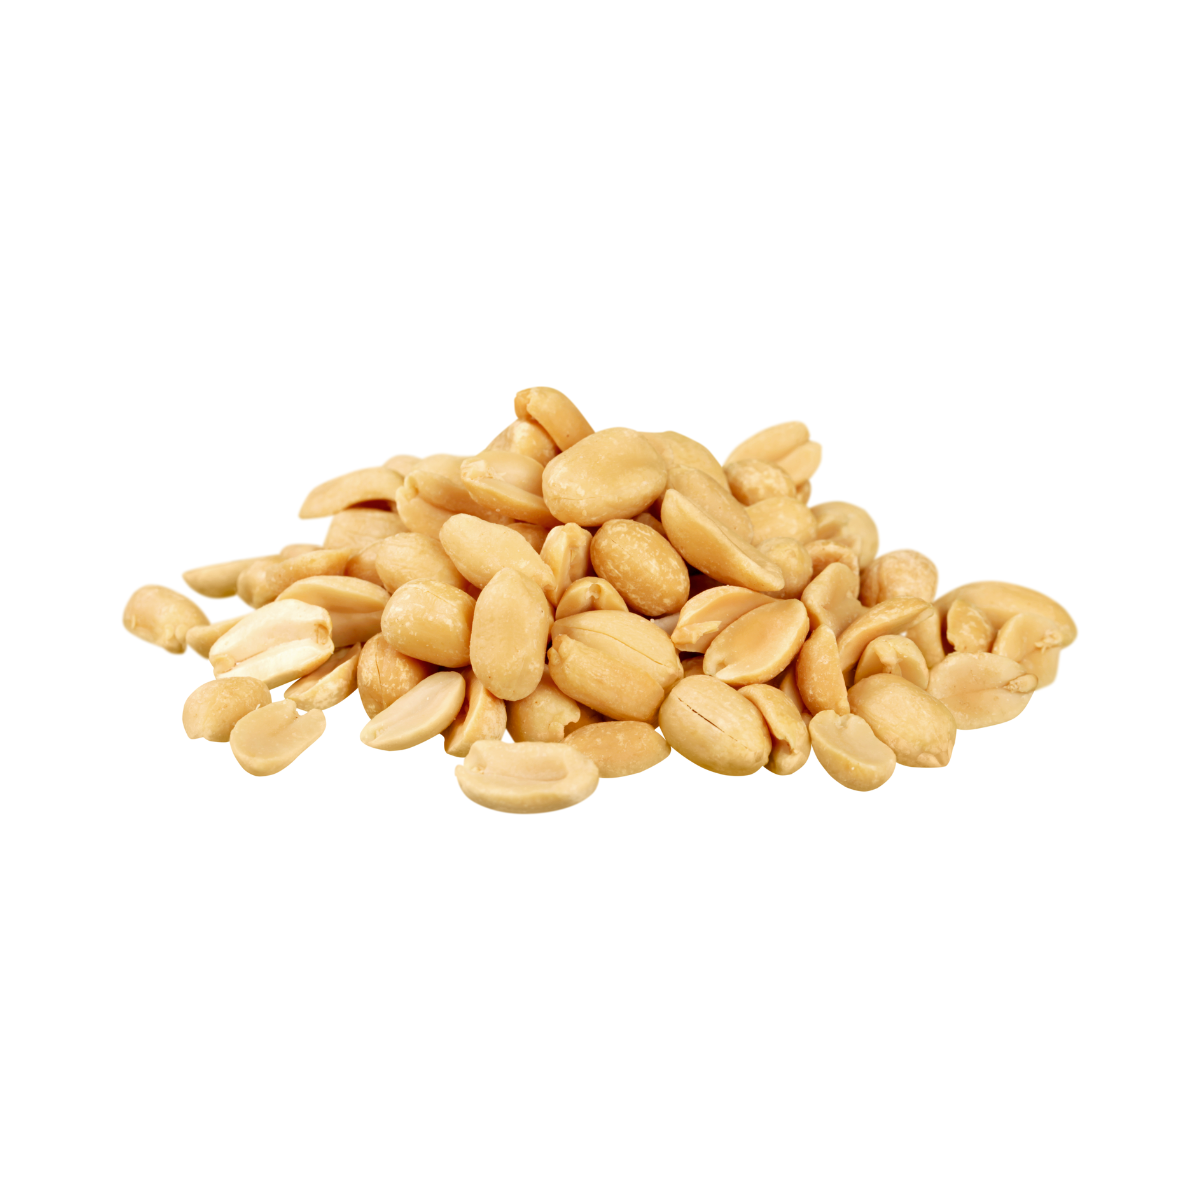 Peanuts (Groundnuts) – Santo Group